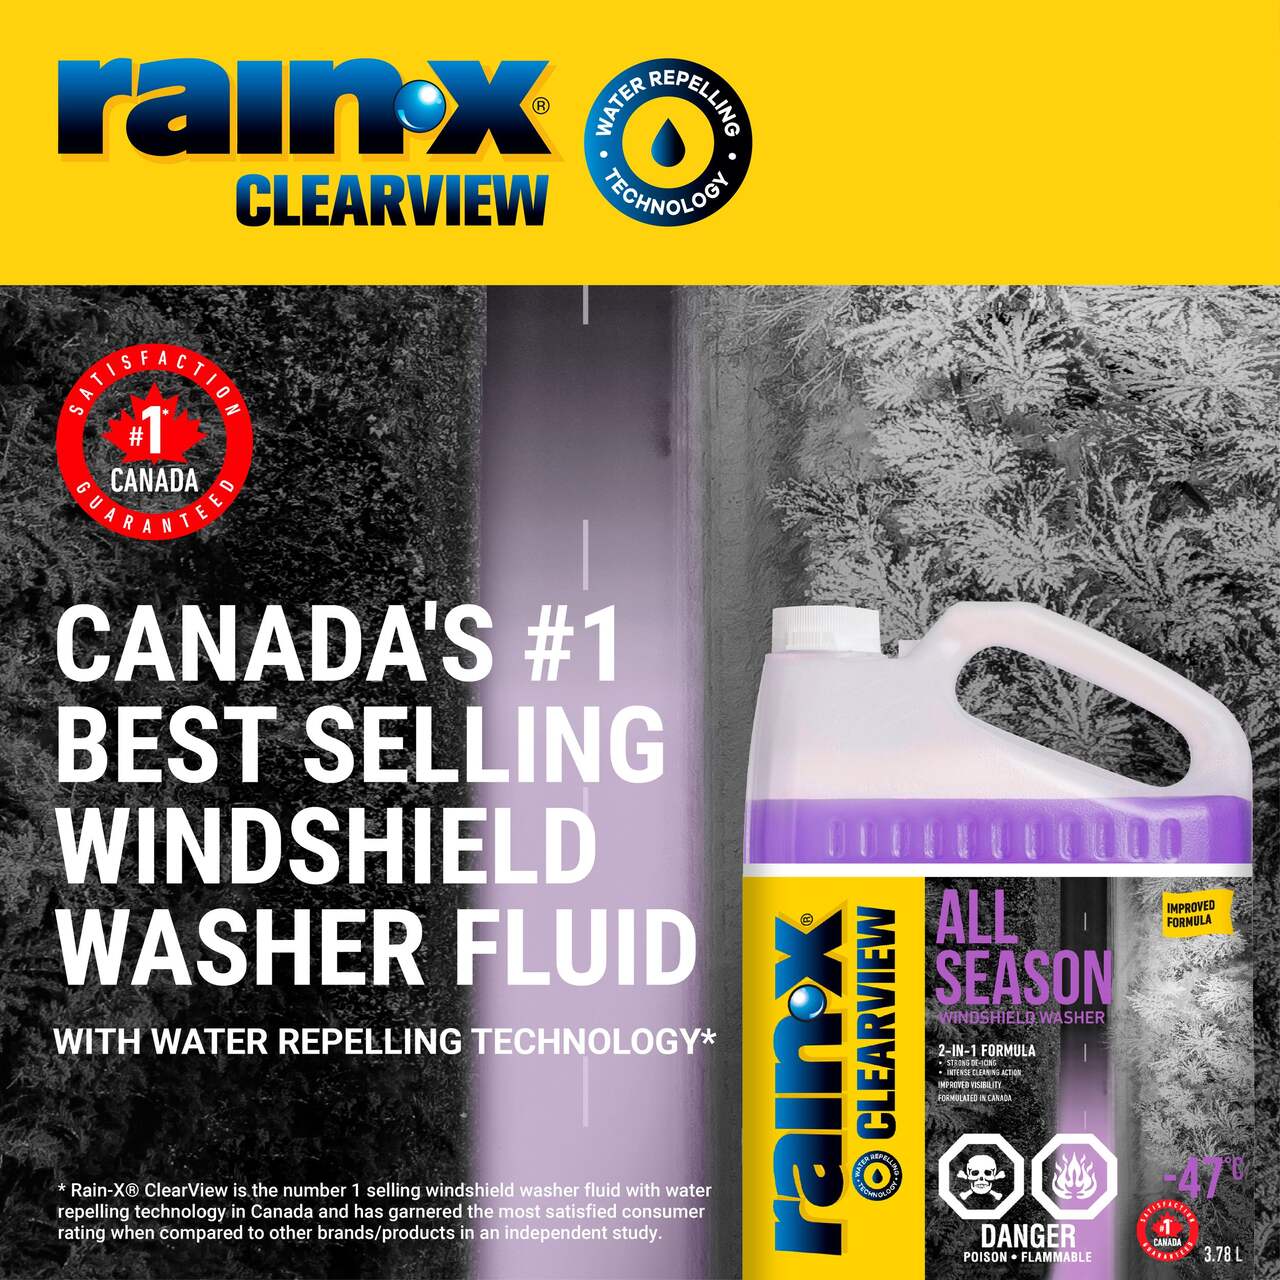 Rain-X ClearView All Season Windshield Washer Fluid, -45°C, 3.78-L